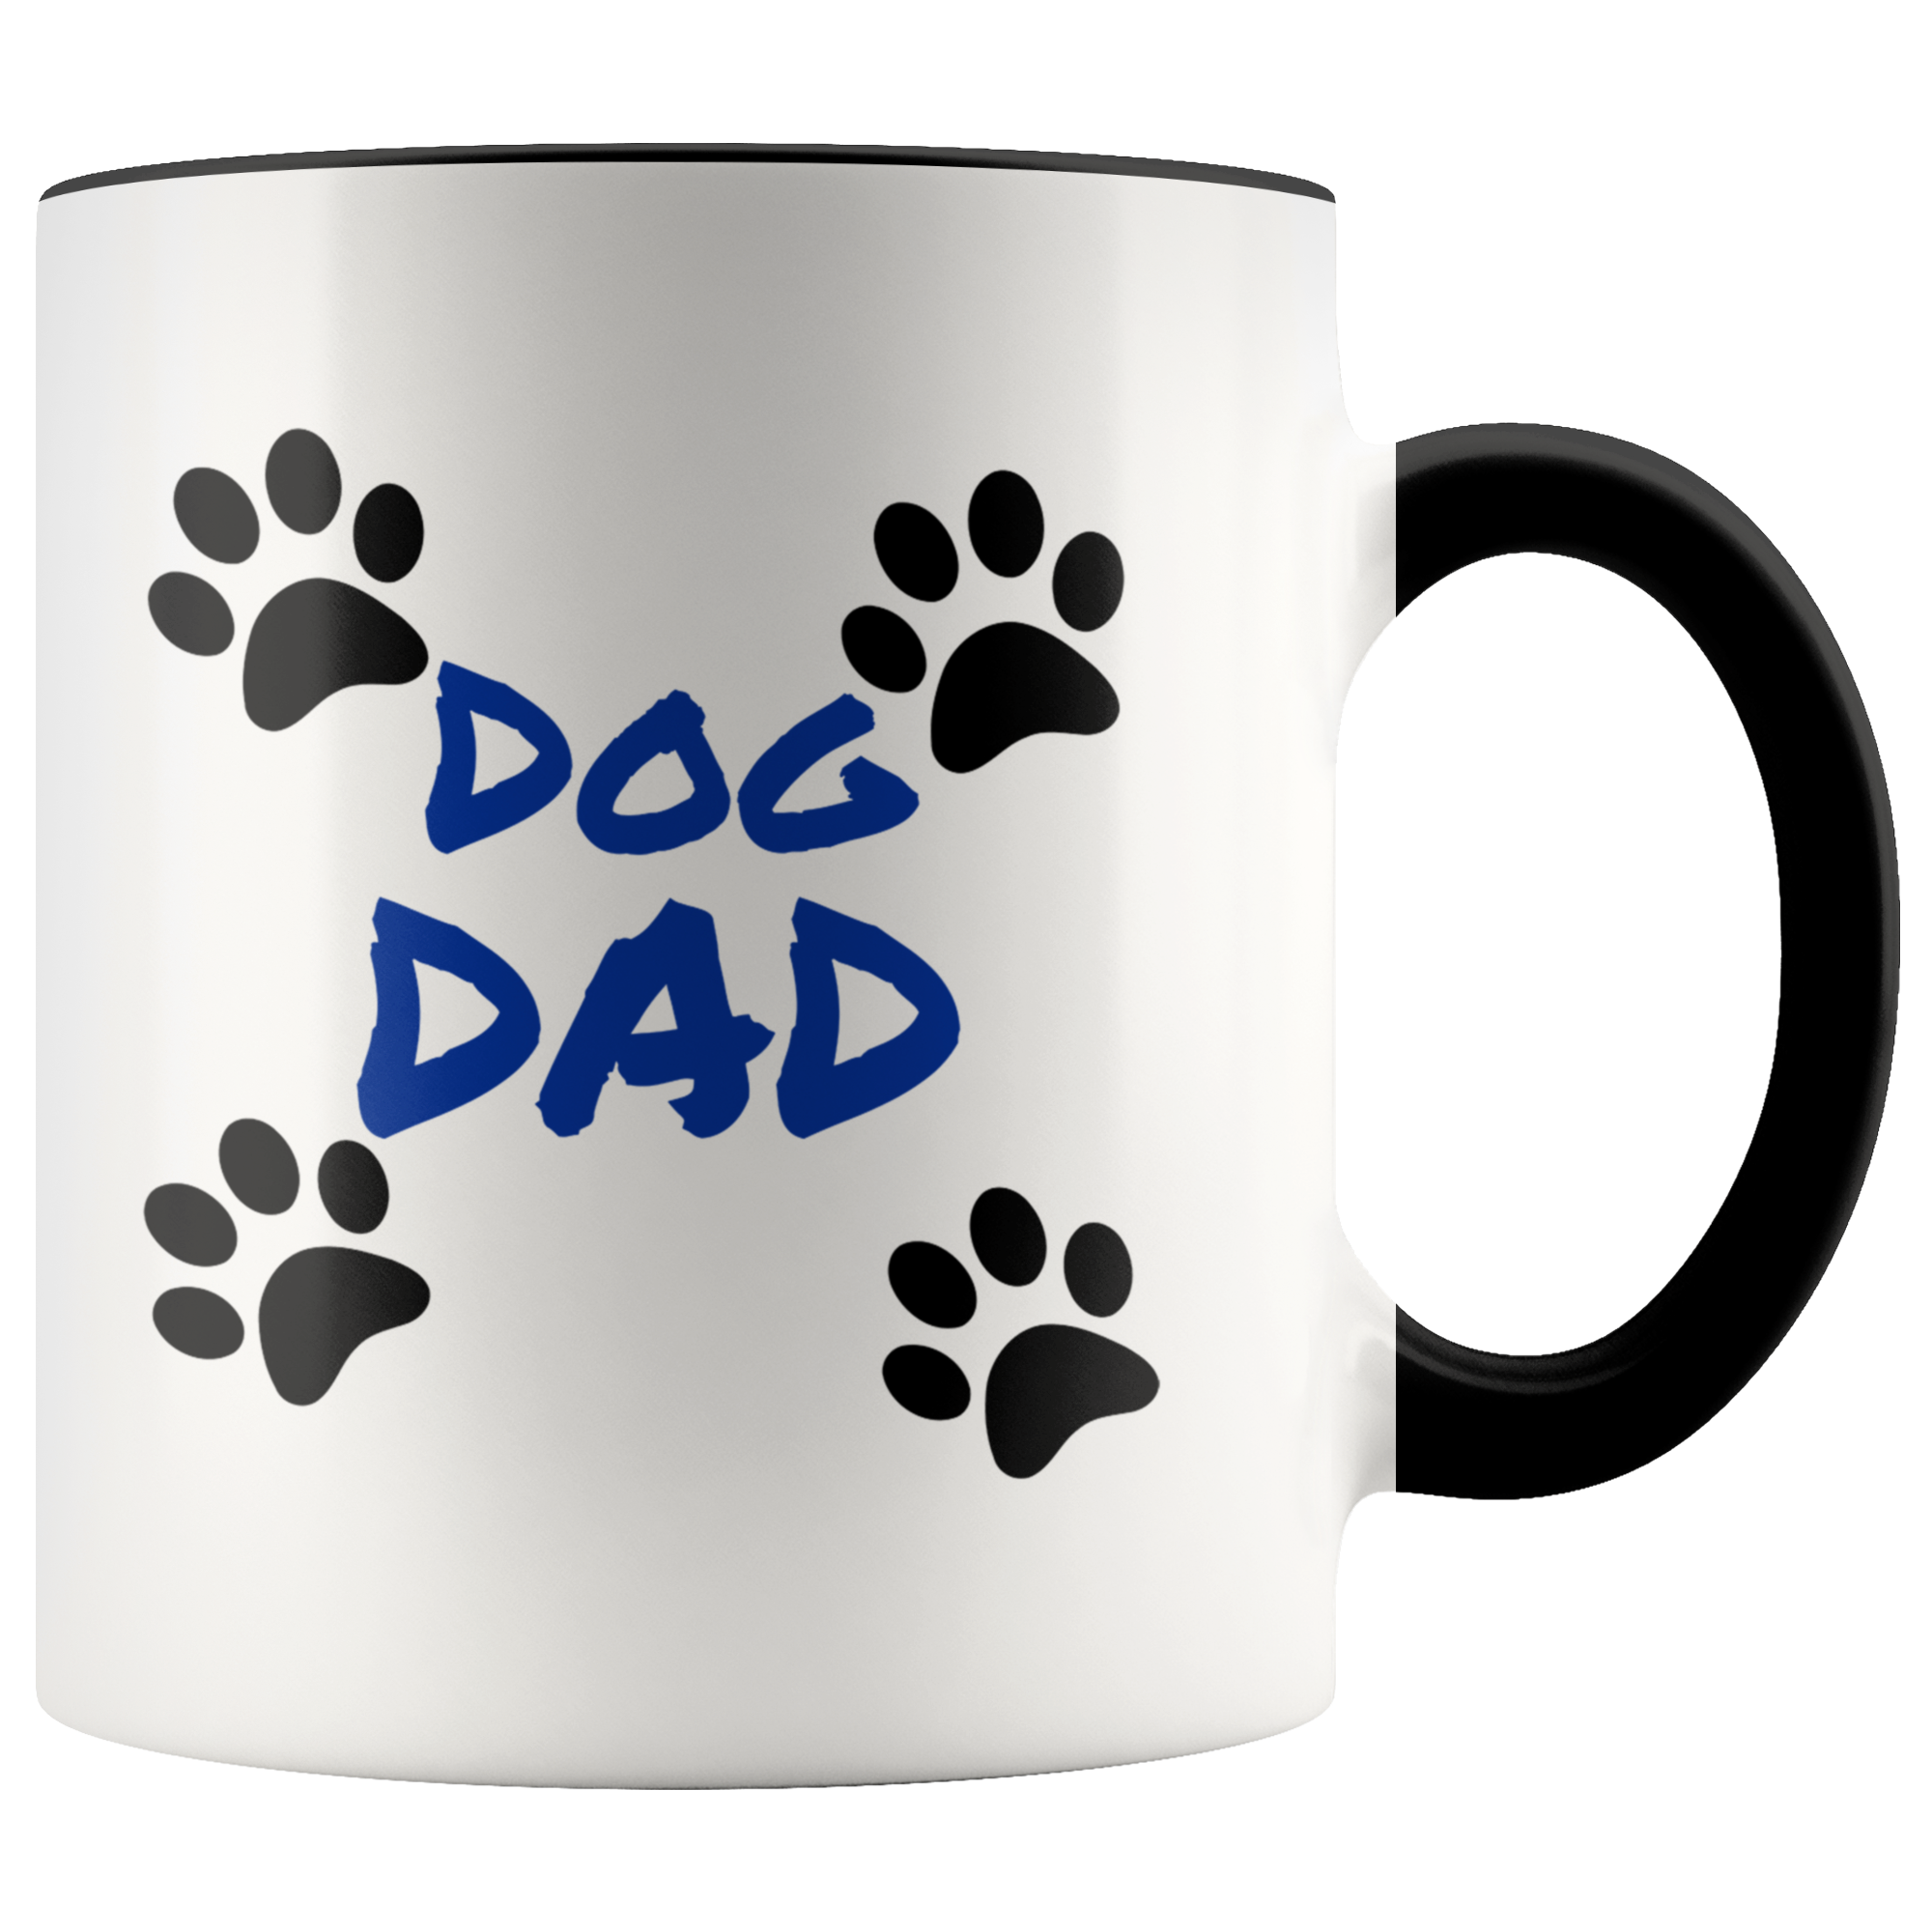 Dog Dad 11oz Ceramic Mug - Dishwasher and Microwave Safe